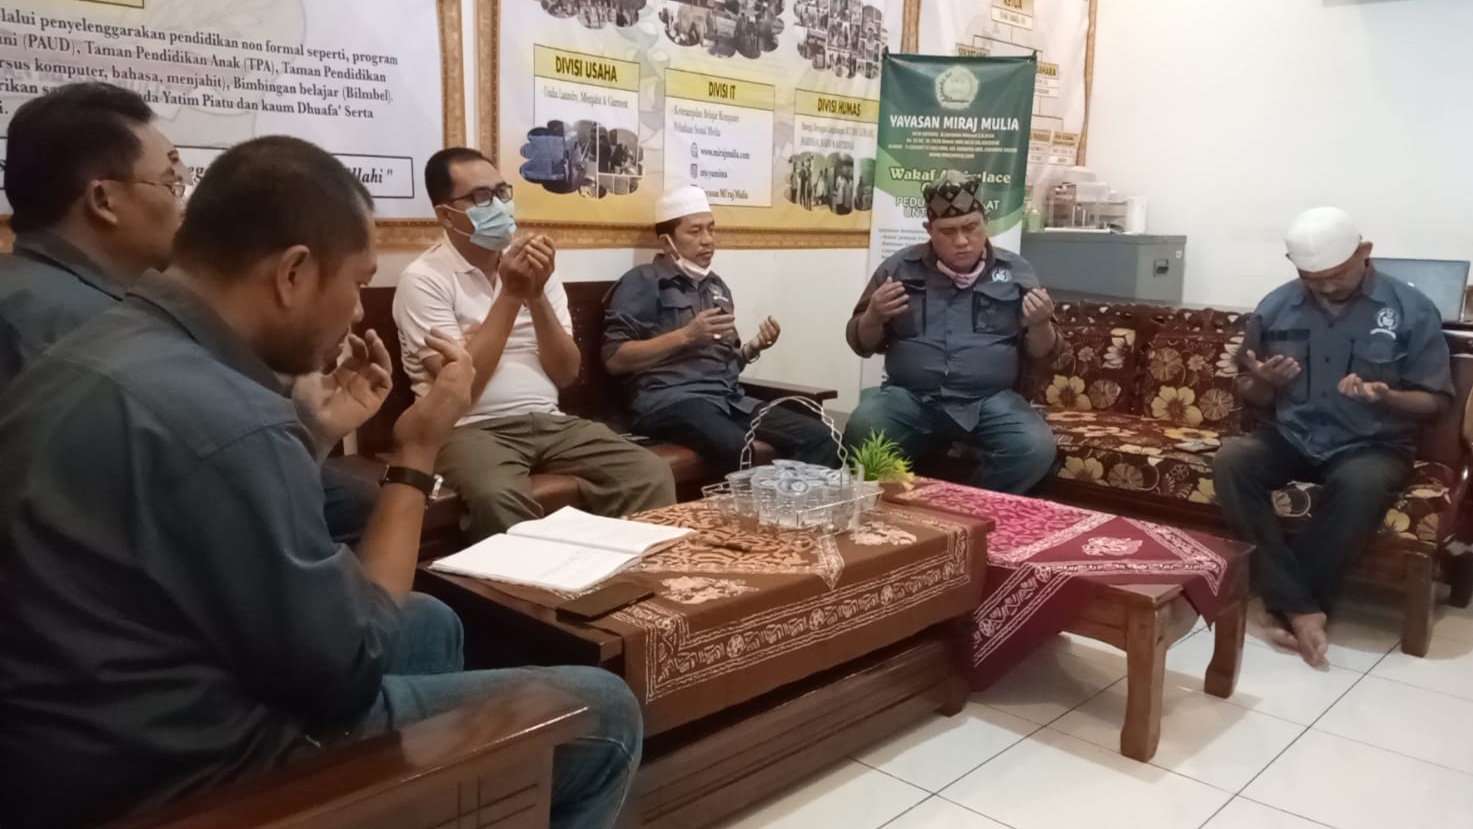 Do'a untuk Pokja Wartawan Kab Bogor, dipimpin Ustadz Badri